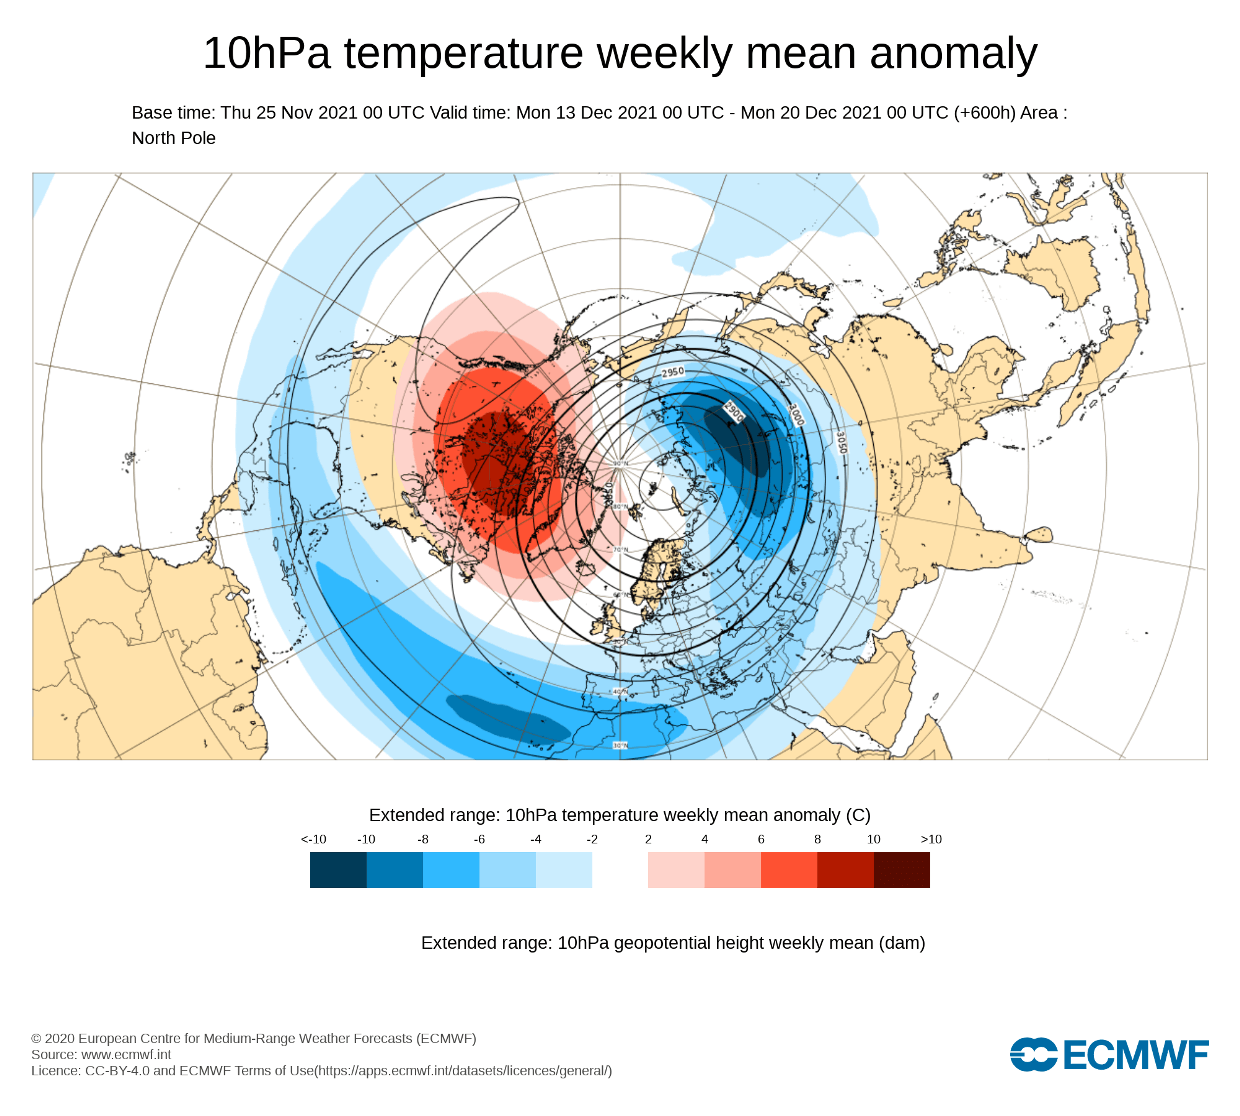 stratospheric-warming-forecast-ecmwf-late-november-cold-season-2021-2022